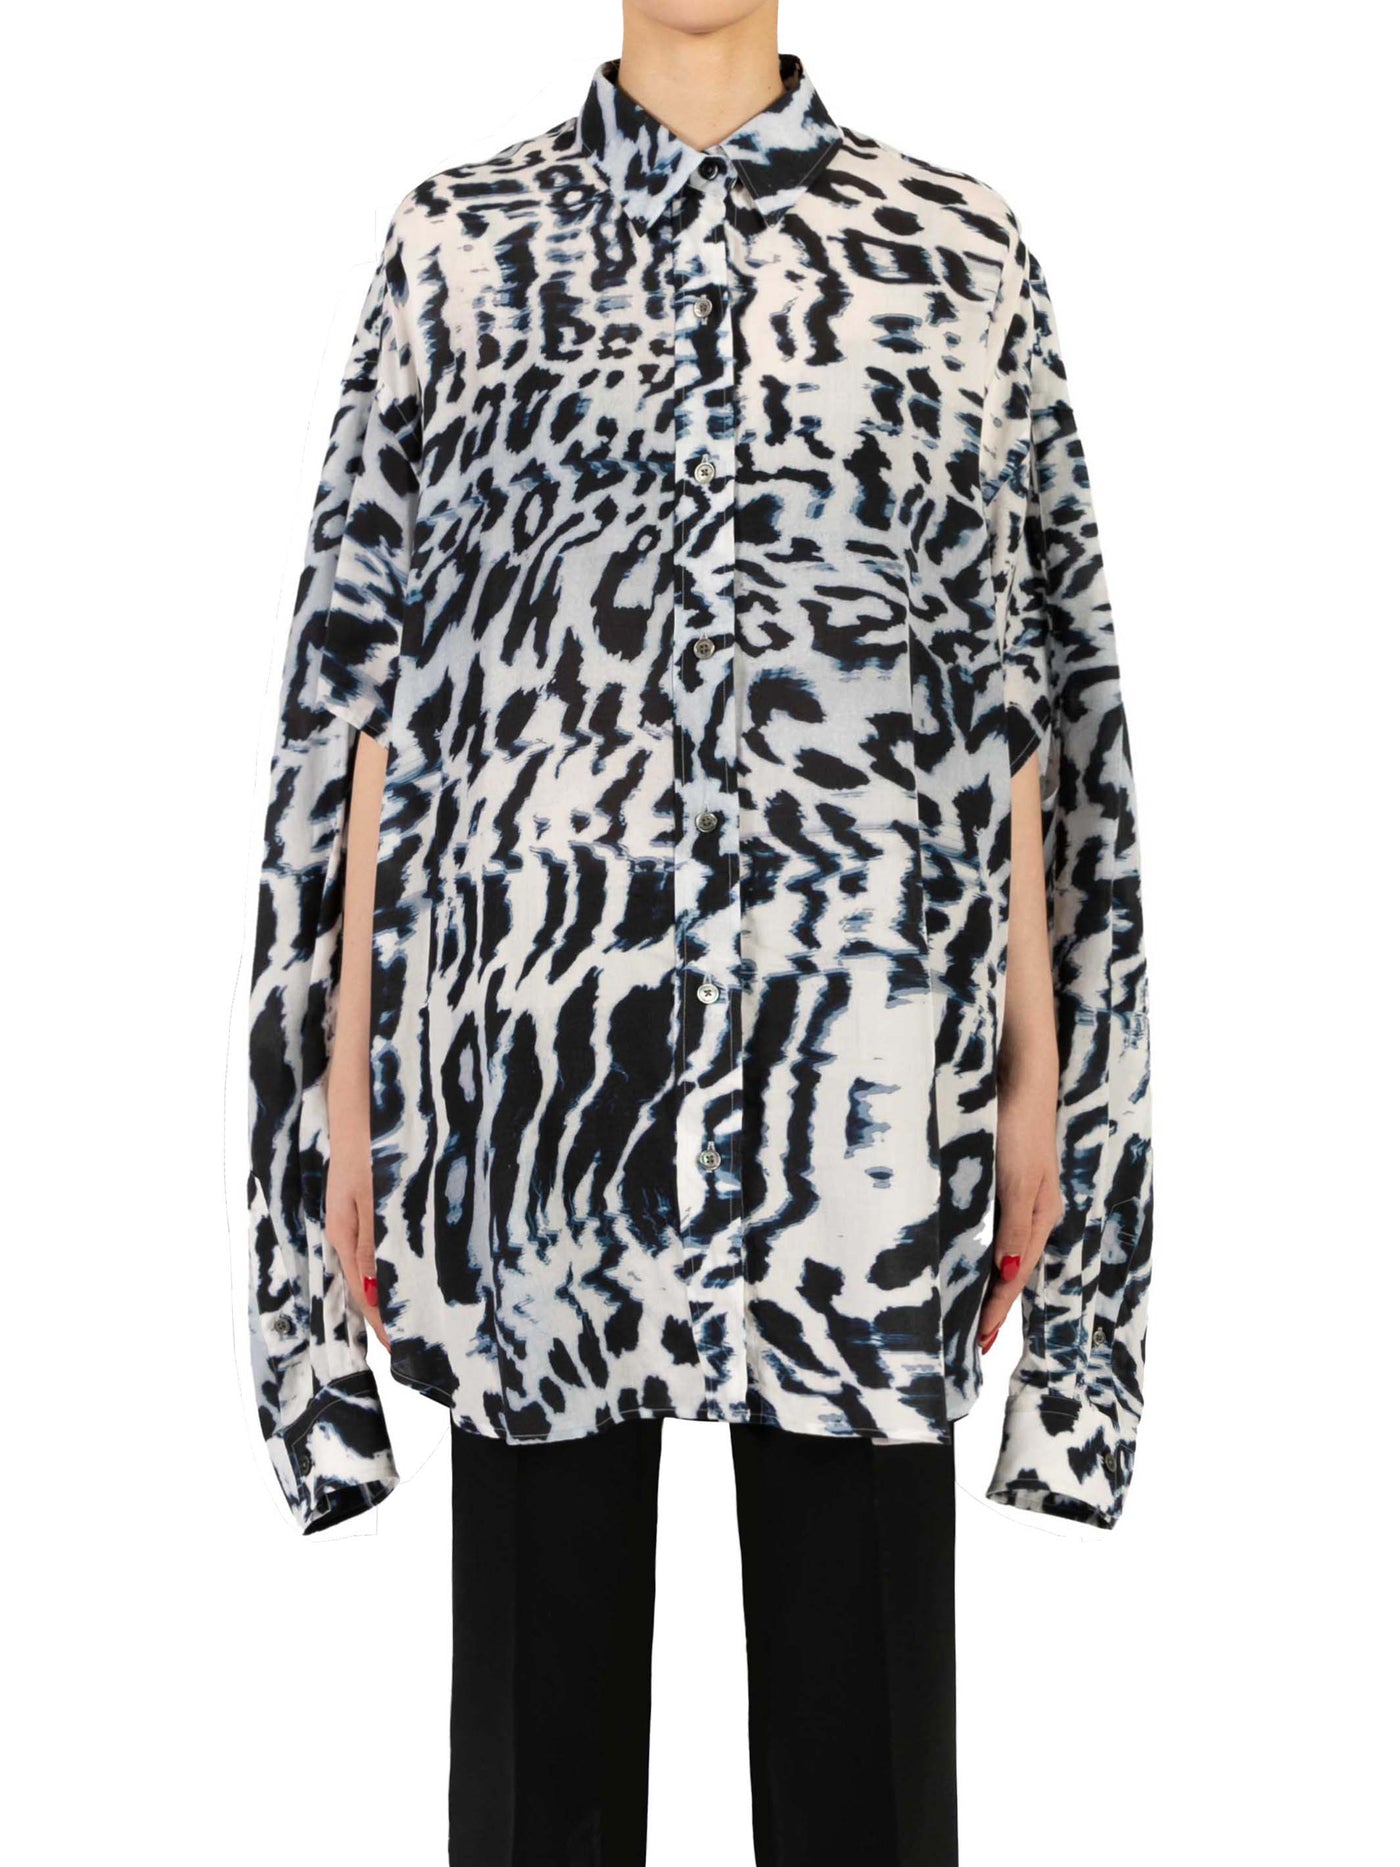 Leopard print cut-off shirt